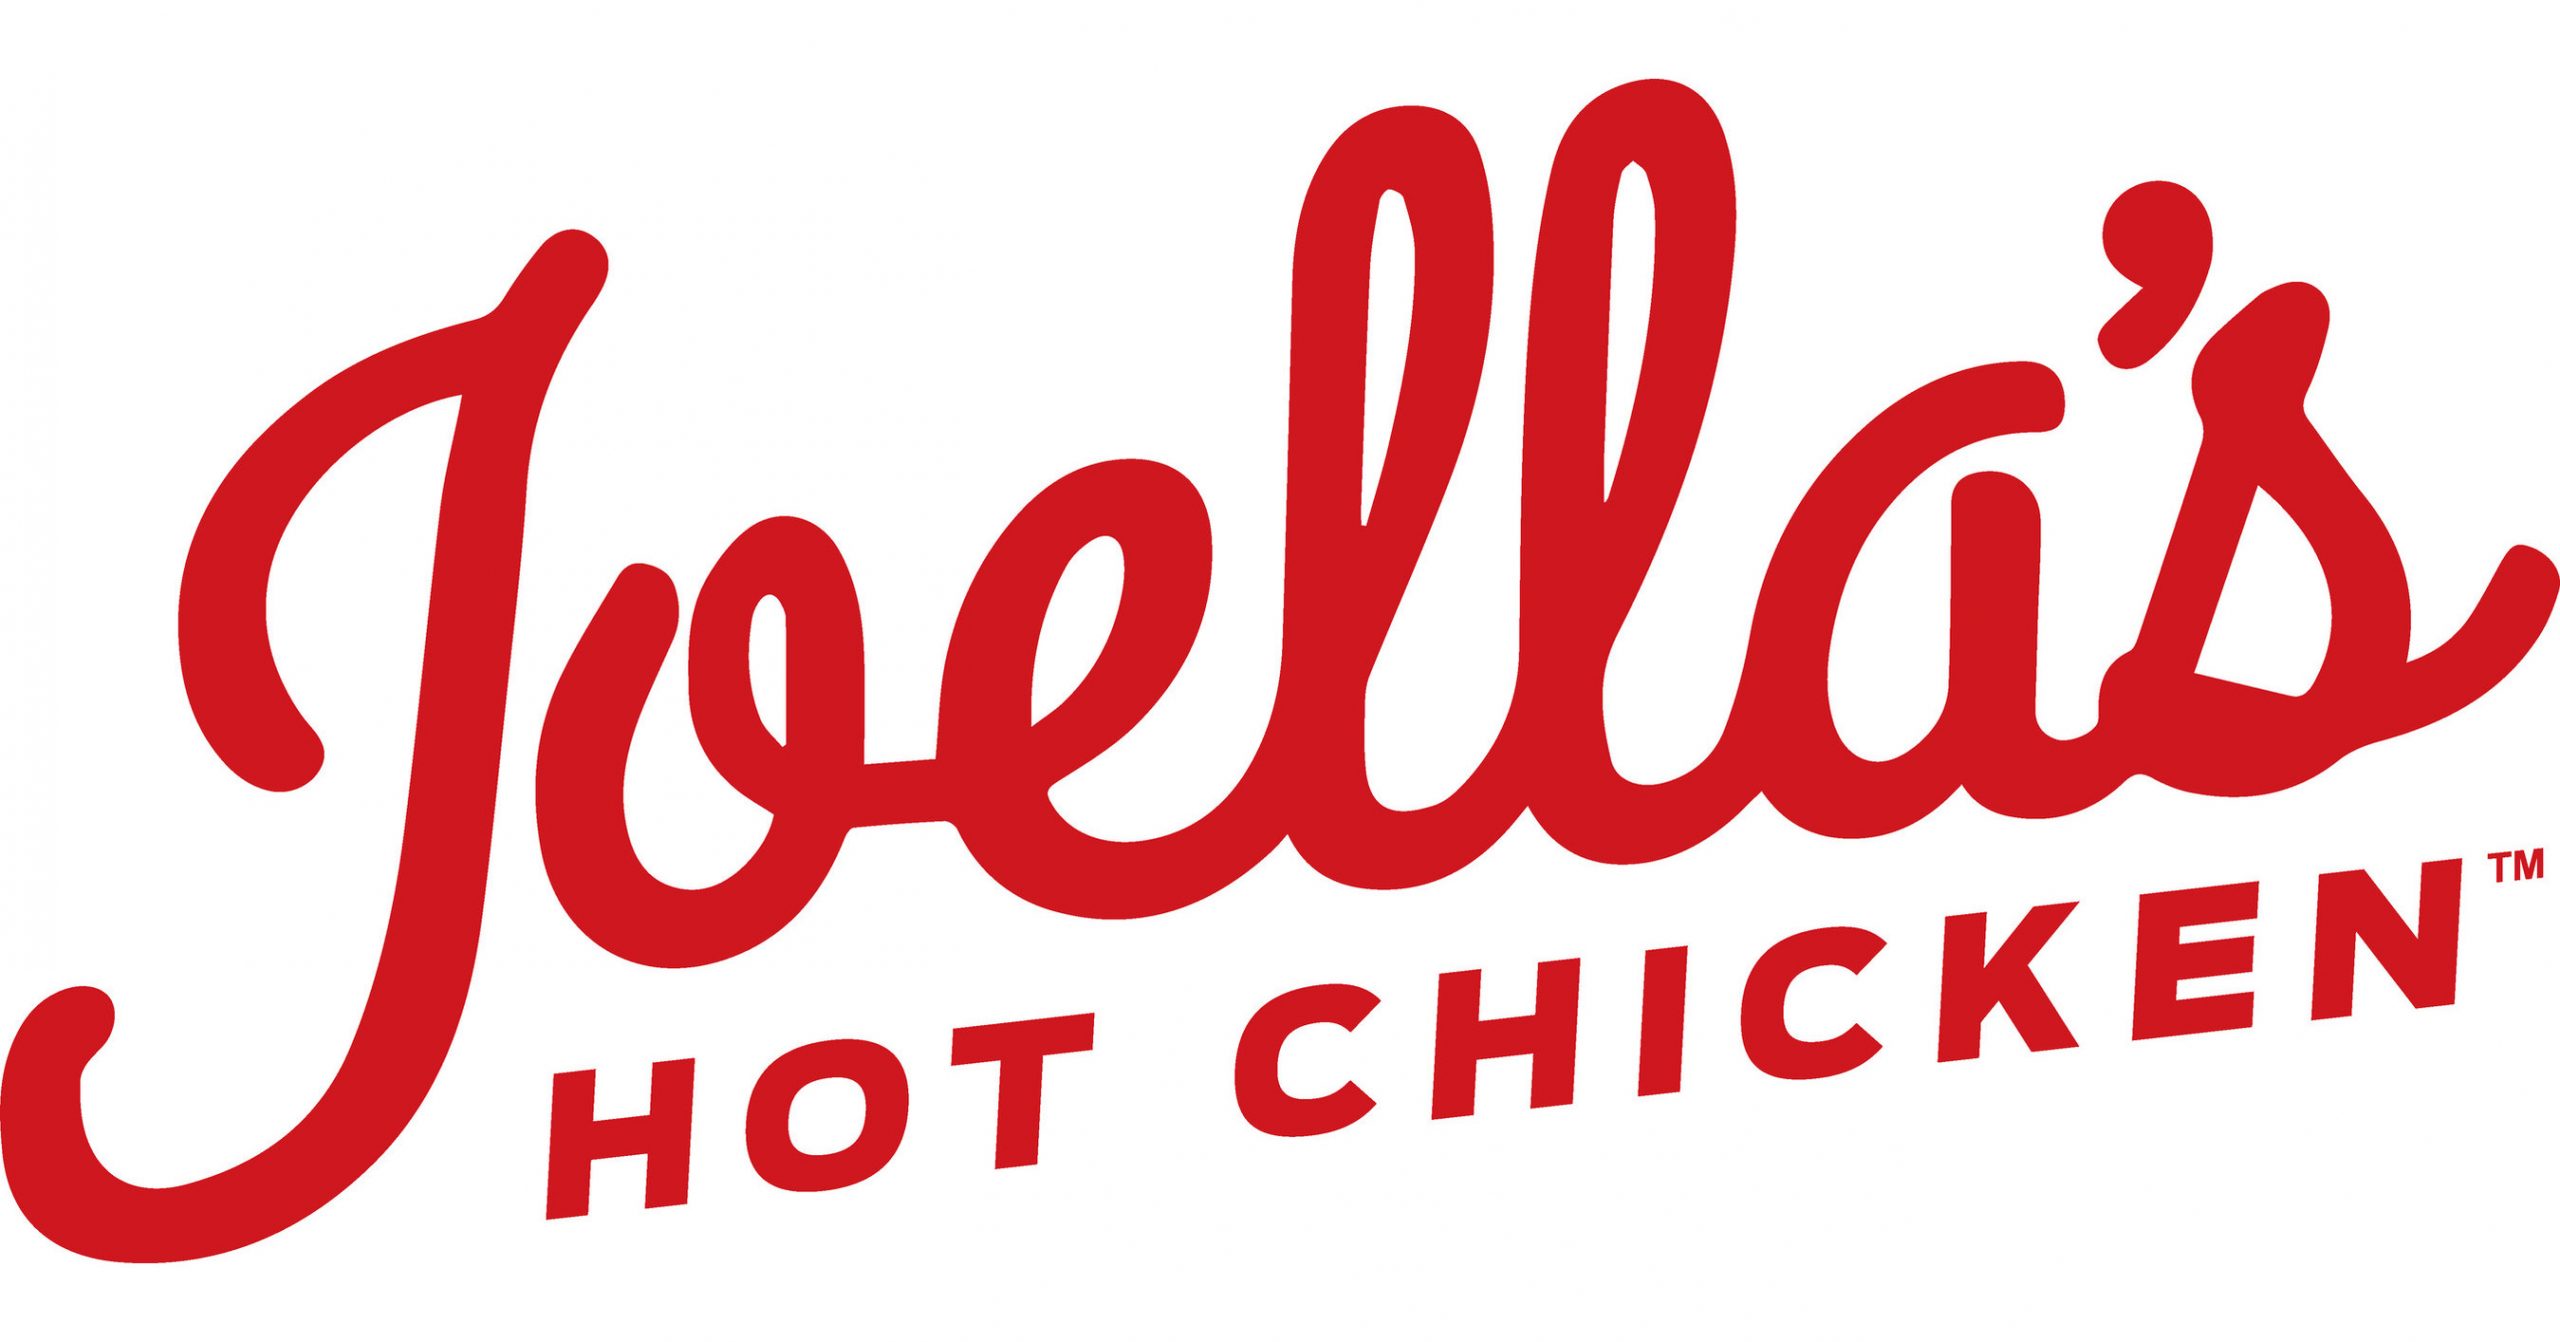 Joellas Hot Chicken Logo